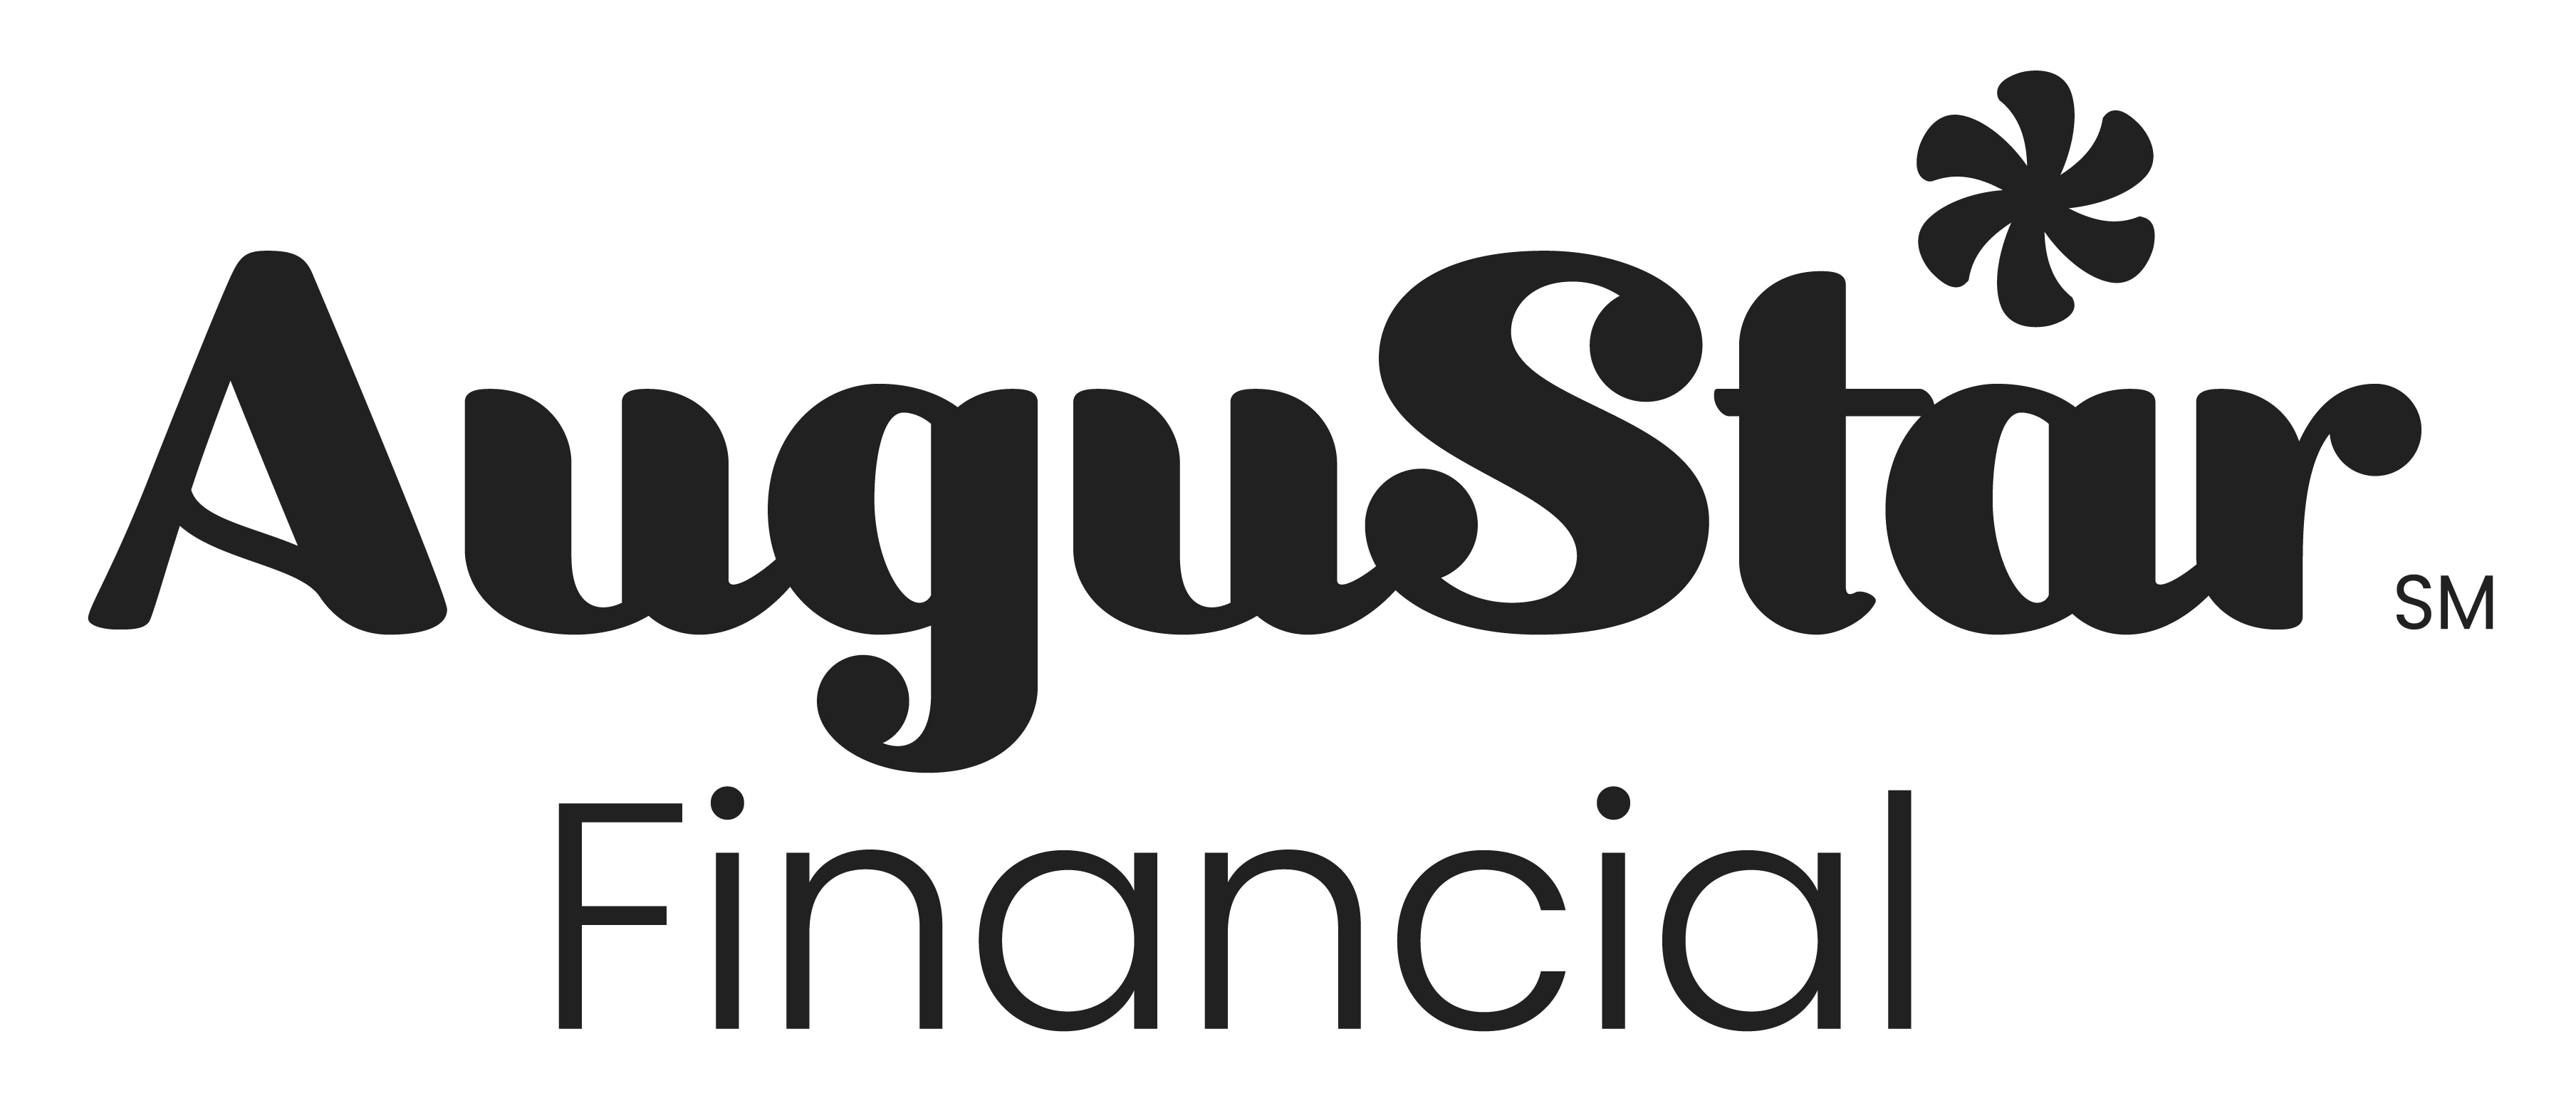 AuguStar Financial